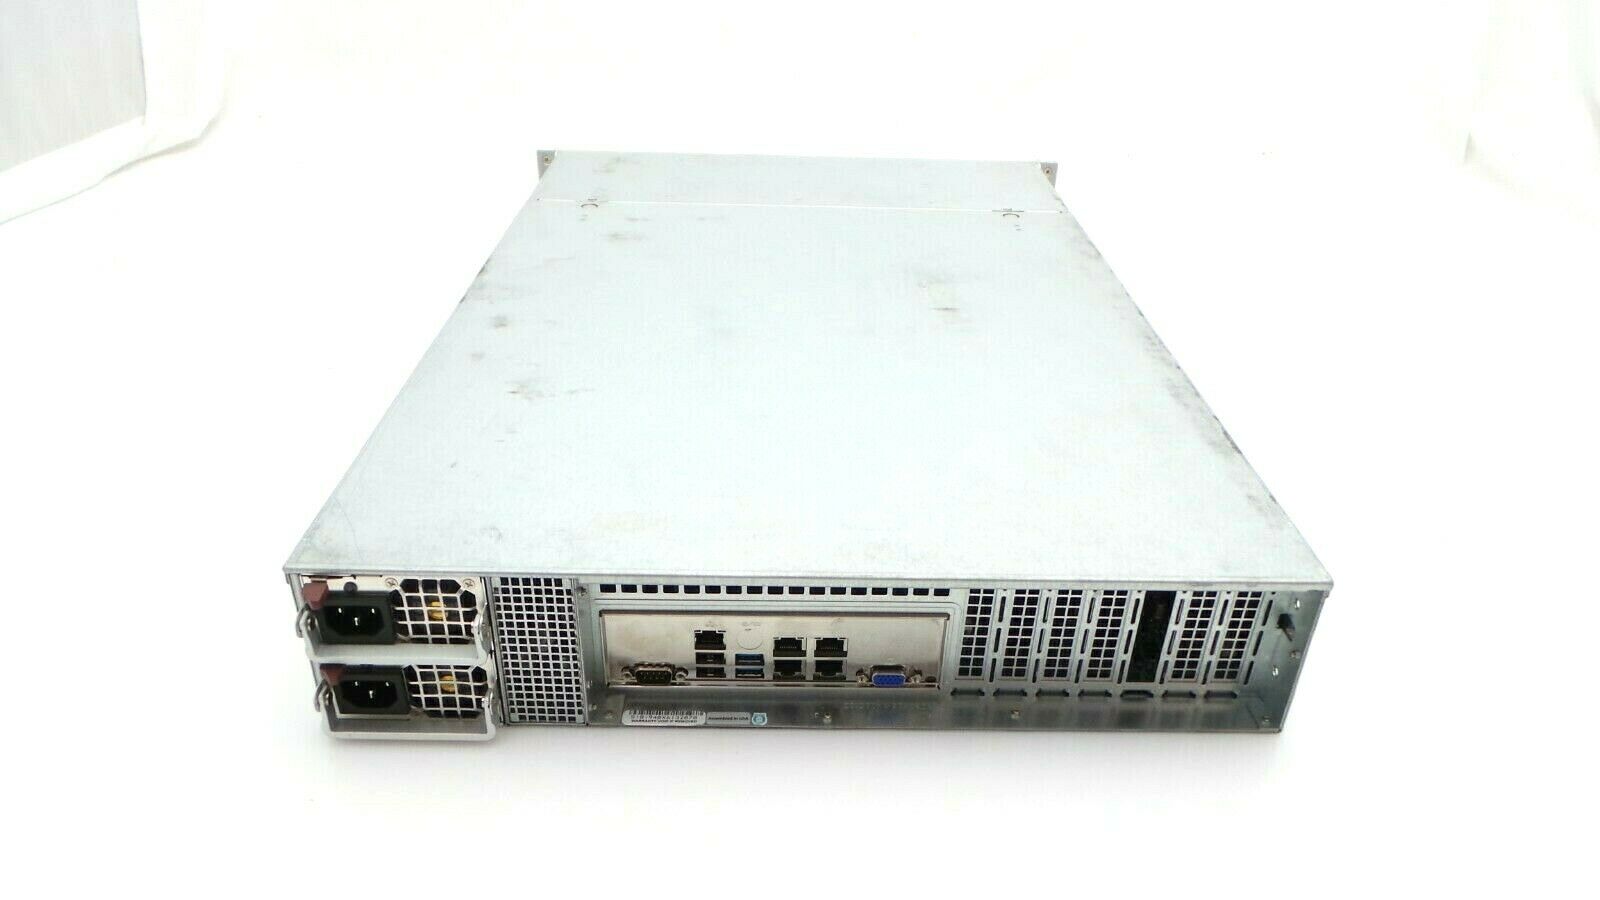 SuperMicro CSE-826_E5-2620v3 CSE-826 2U 12-Port LFF 2 Flex Port SFF Server w/ X10DRi-LN4+ Motherboard, Used